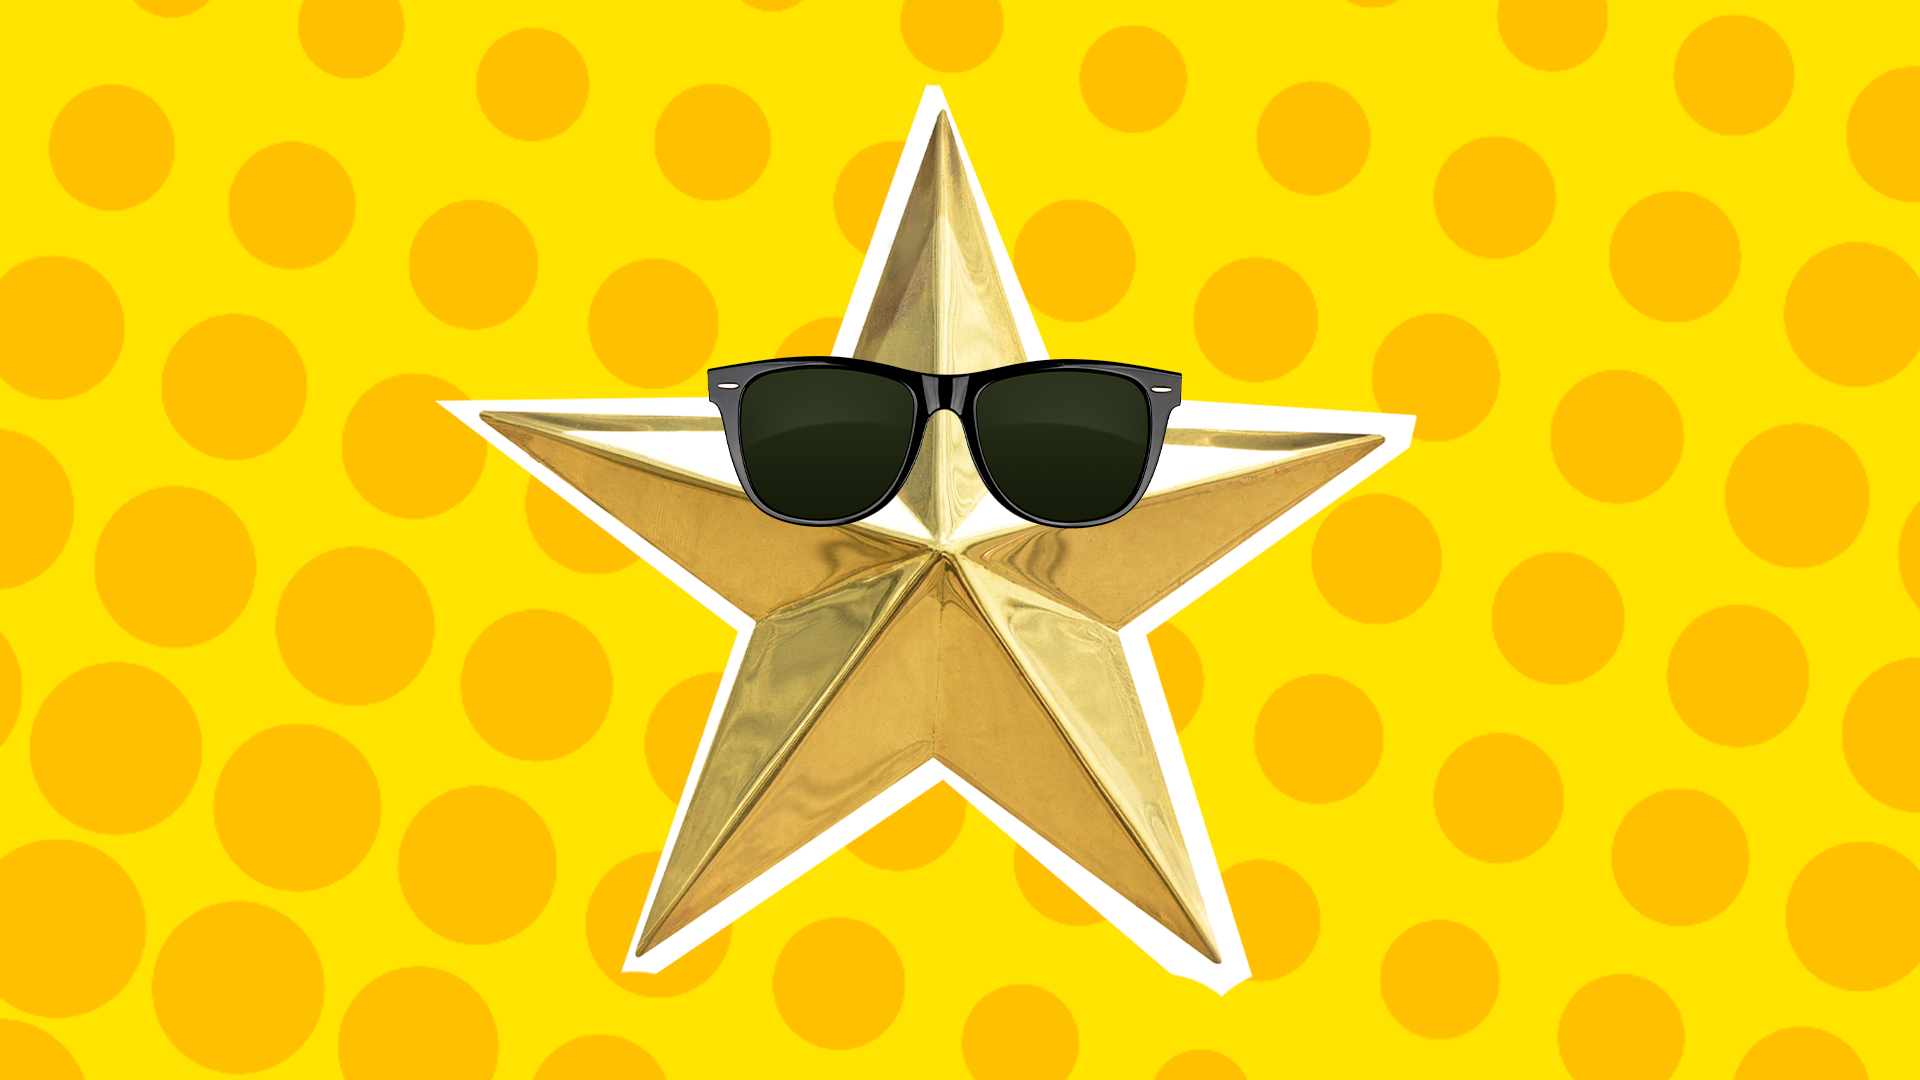 Star shape with sunglasses